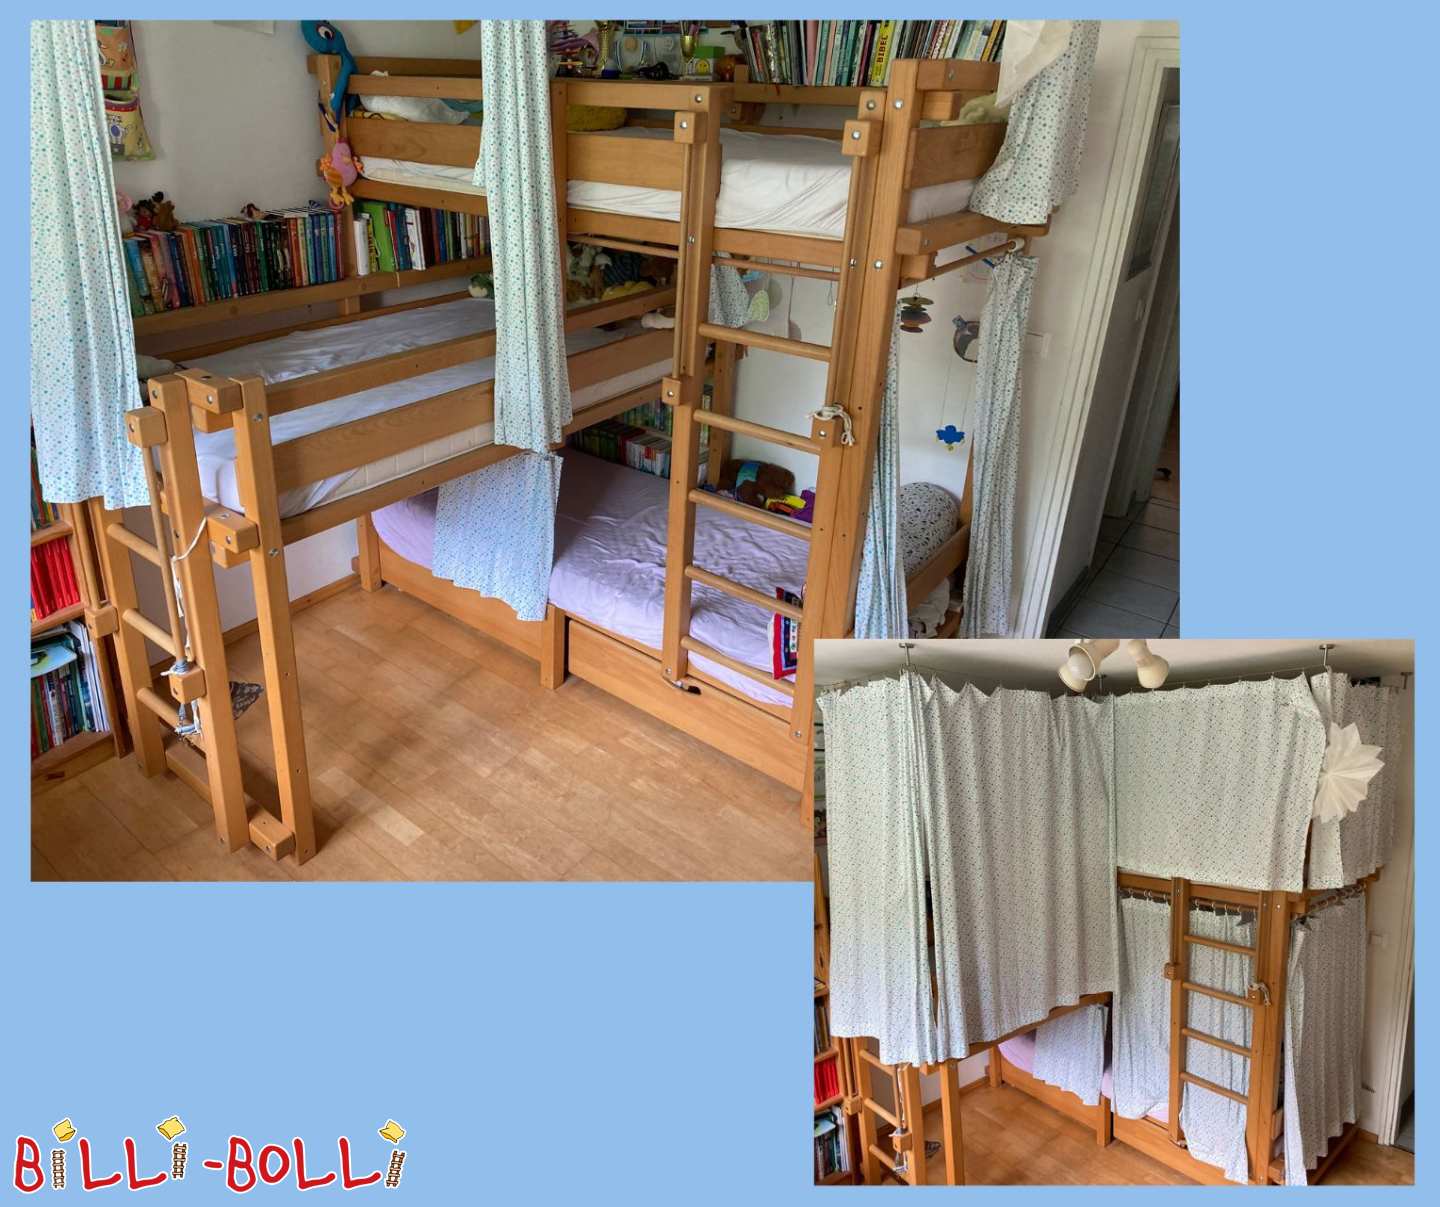 Triposteljna postelja tipa 1A 90x200 v bukevu z oljnim voskom (Kategorija: Uporabljeni Triposteljni pogradi)